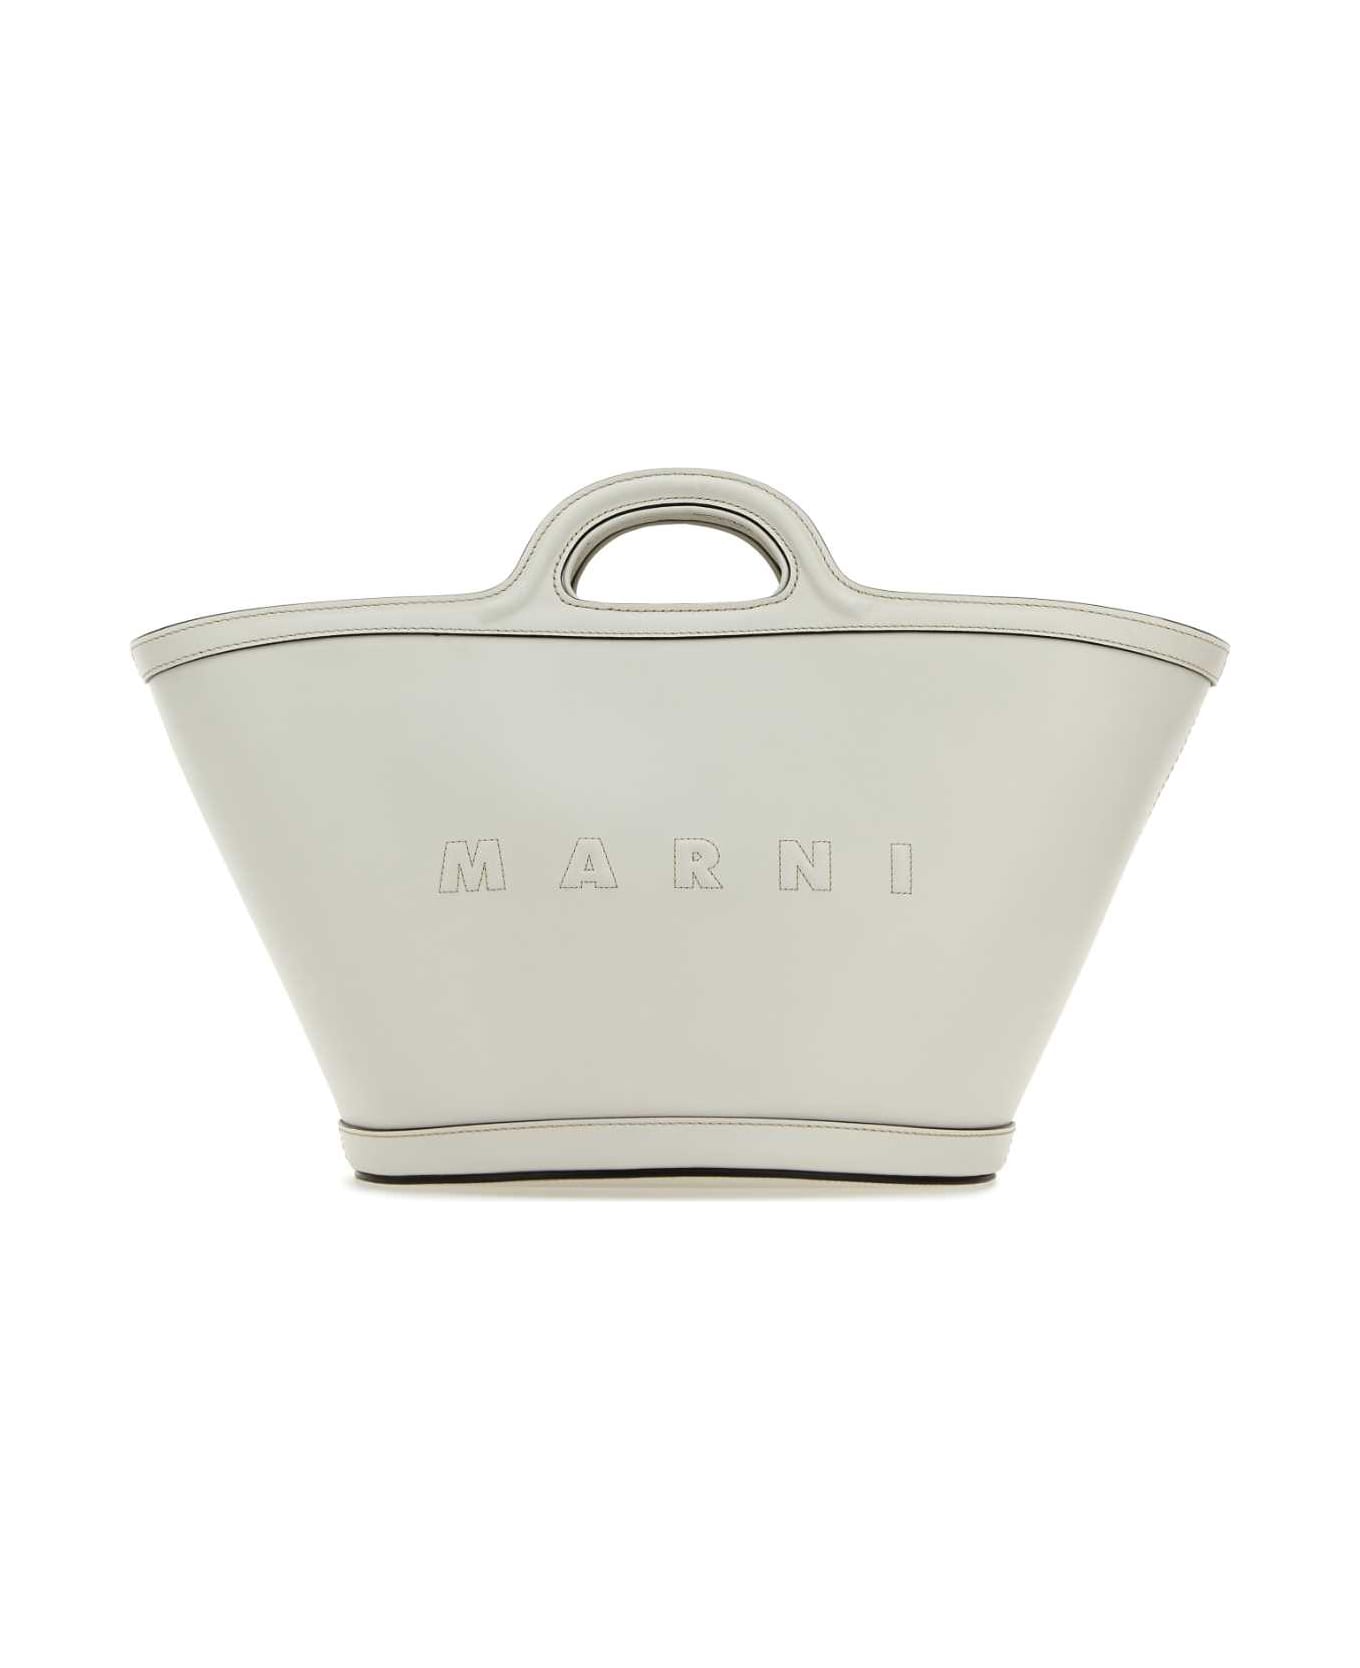 Marni White Leather Small Tropicalia Handbag - 00W05